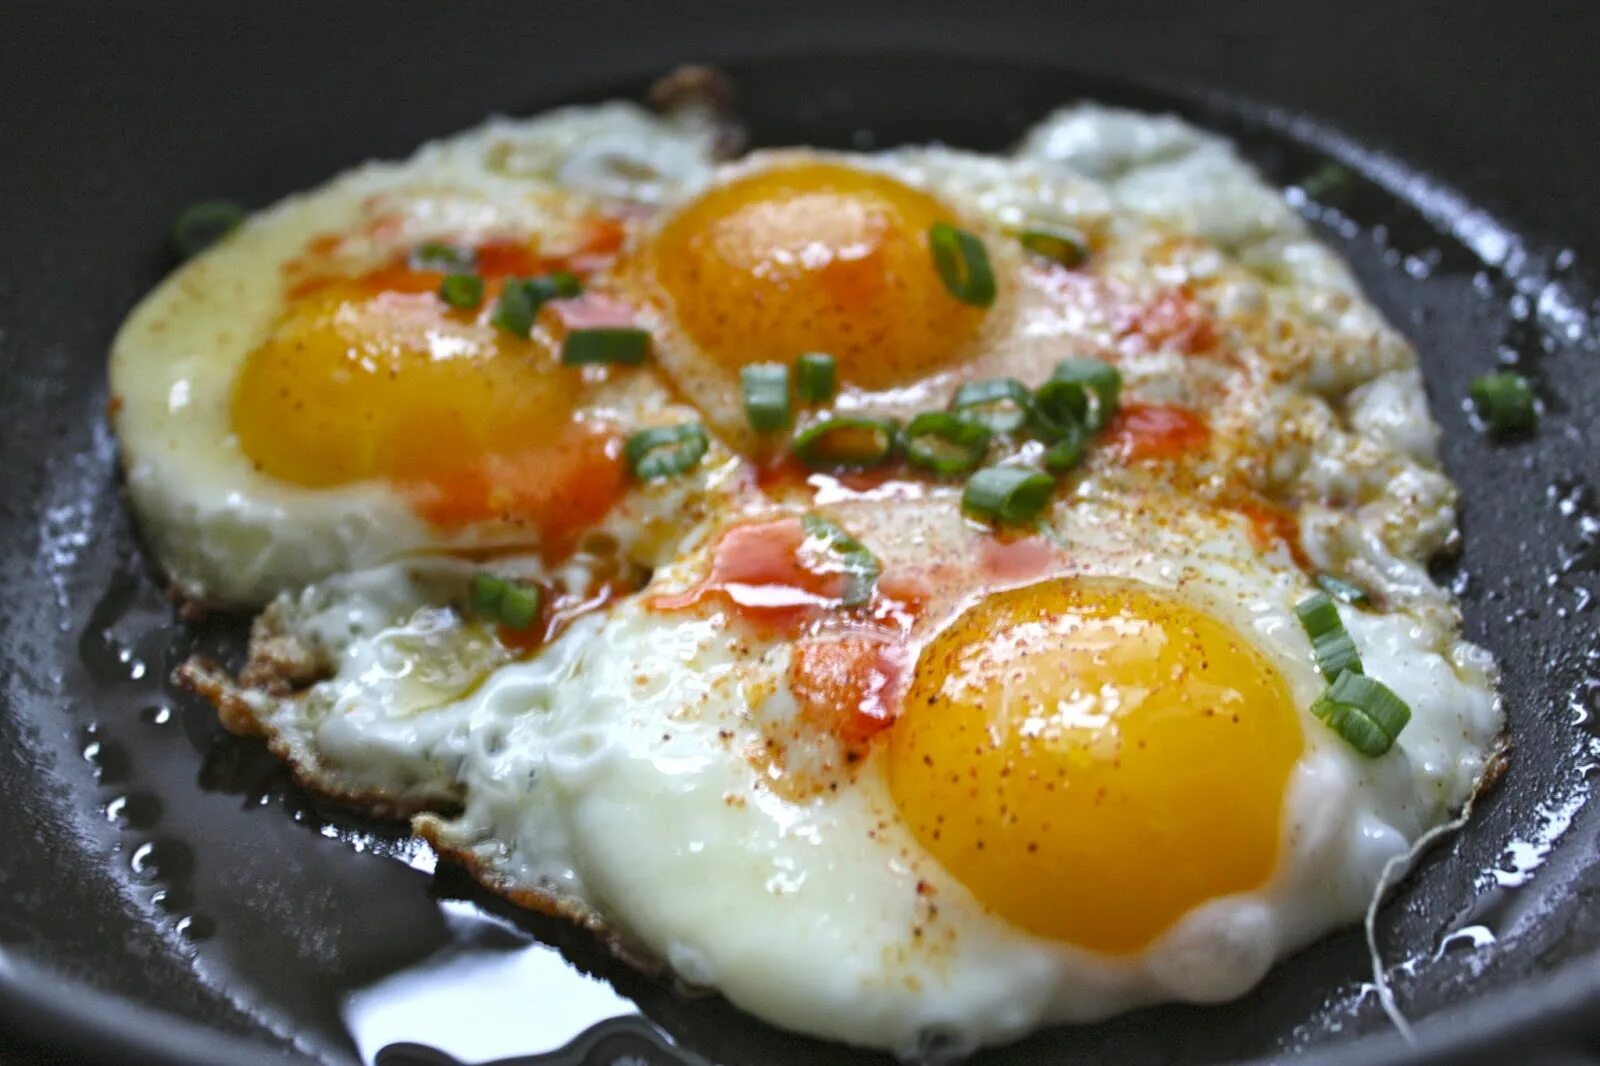 Cooked egg. Яичница. Яичница глазунья. Жареные яйца. Глазунья из яиц.